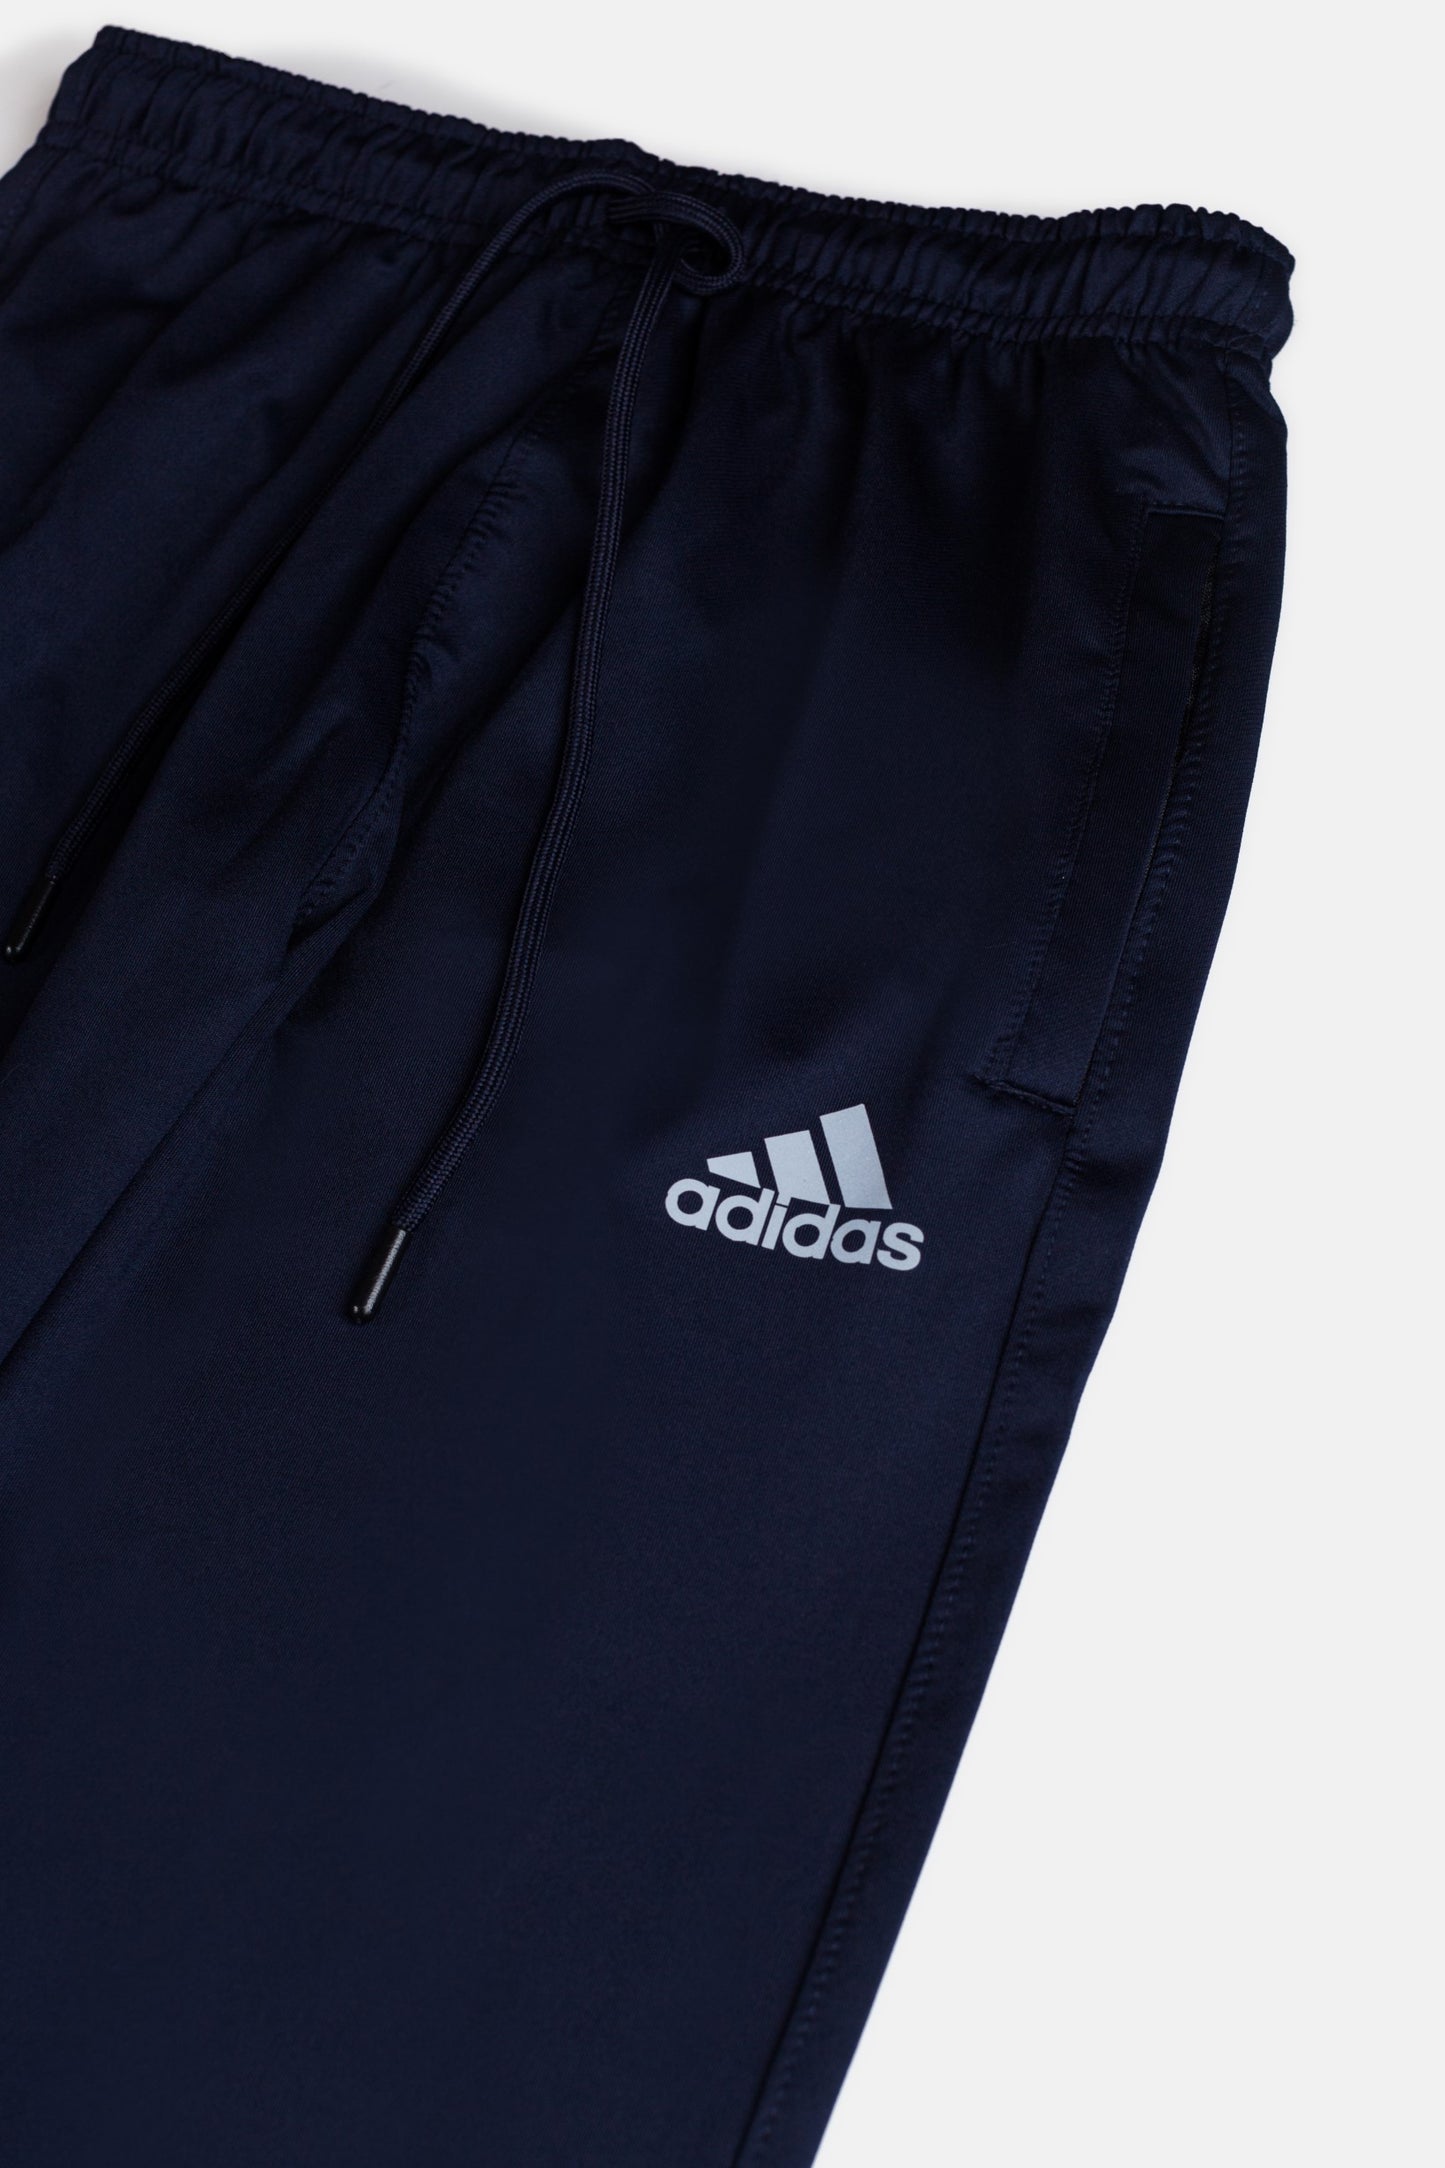 Adidas Premium Sports 3 Stripes Trouser – Navy Blue